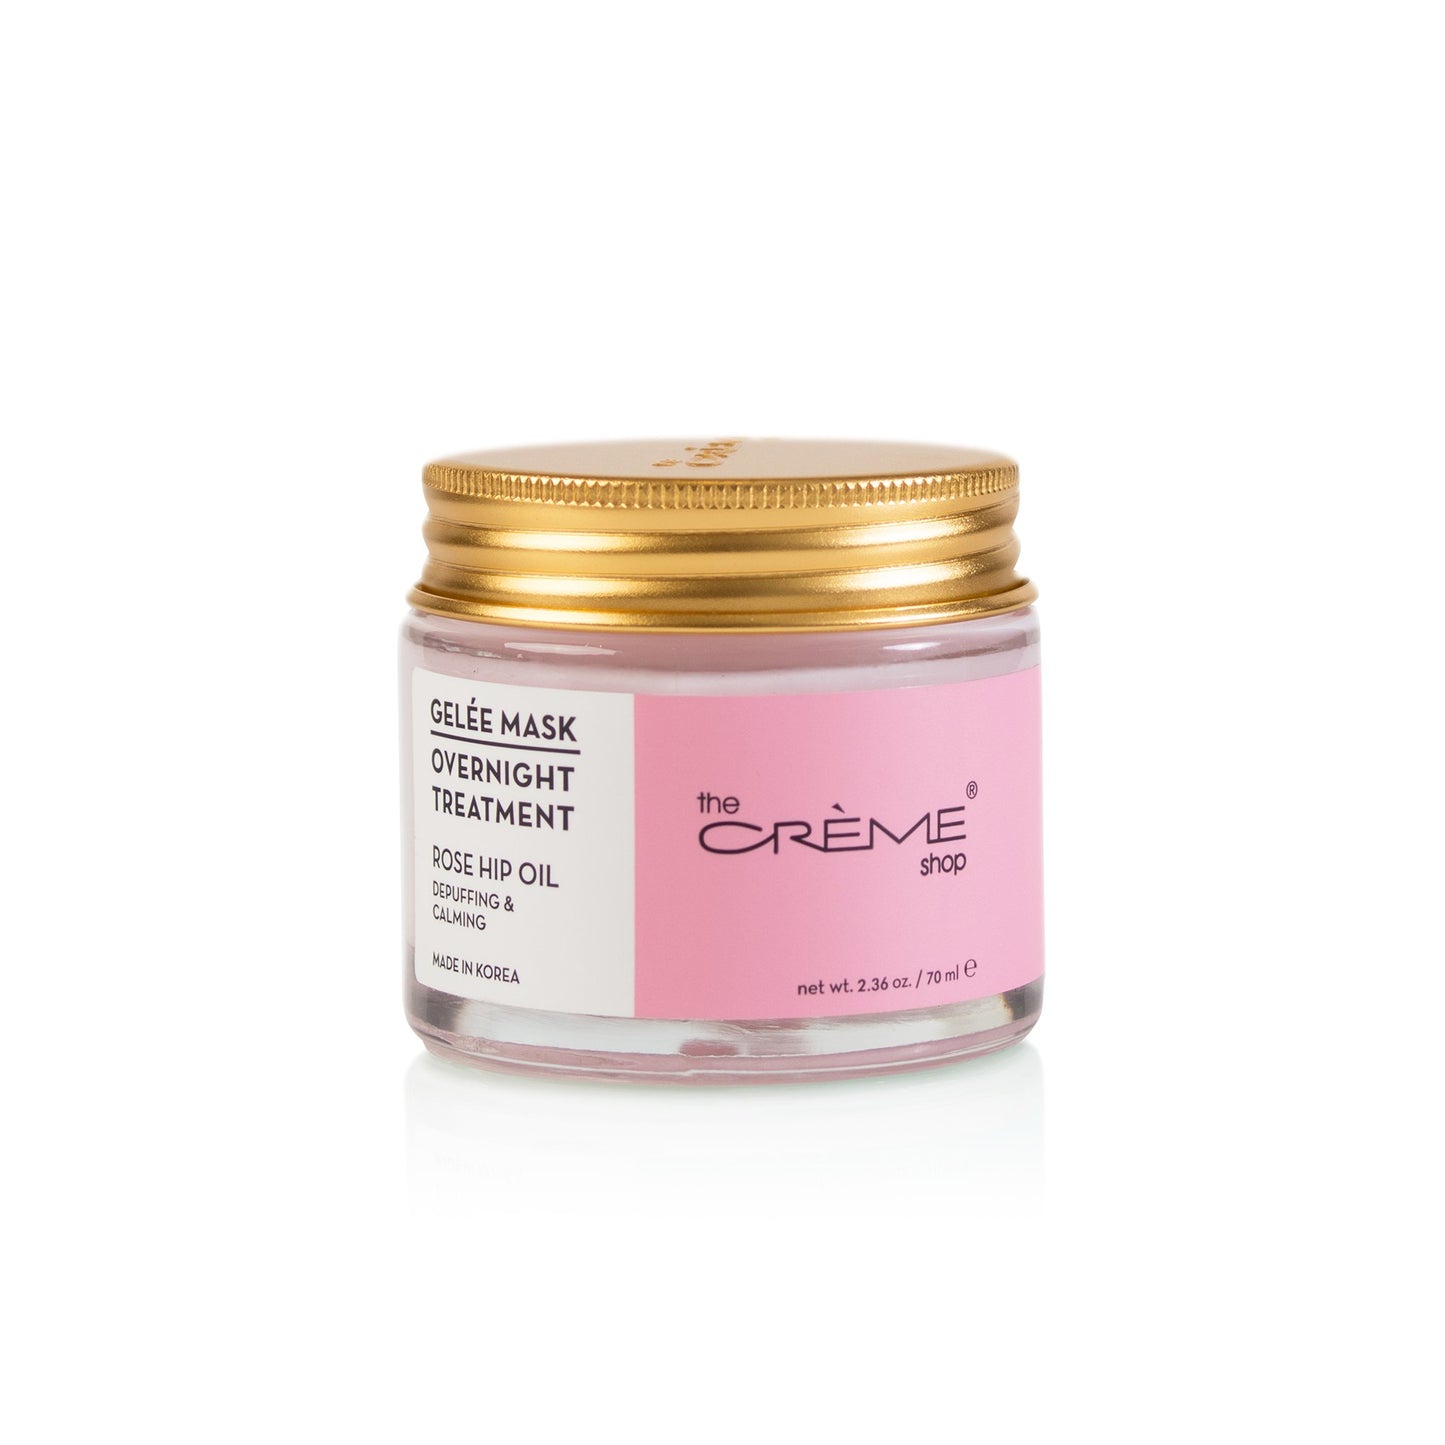 Rose Hip Oil Gelée Mask Overnight Treatment - The Crème Shop